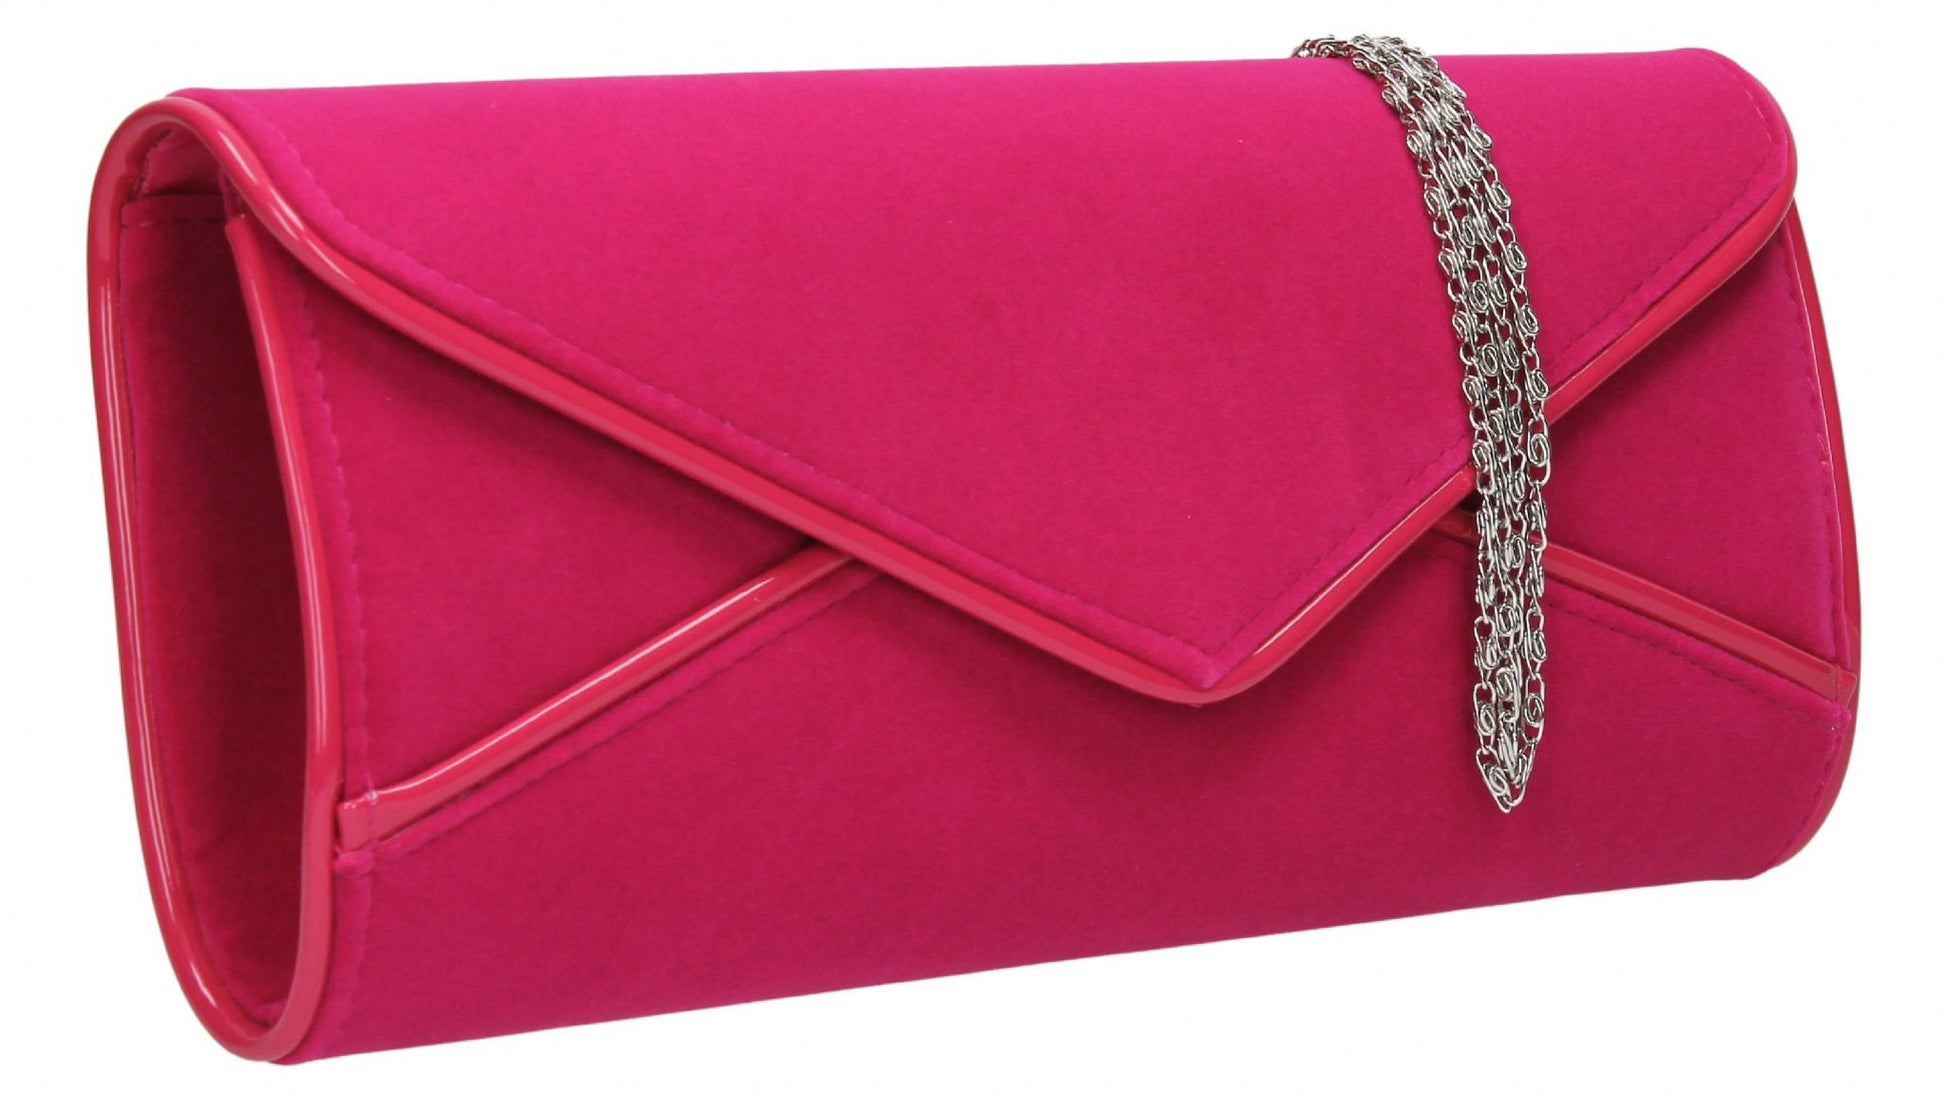 SWANKYSWANS Perry Velvet Clutch Bag - Fuschia Cute Cheap Clutch Bag For Weddings School and Work